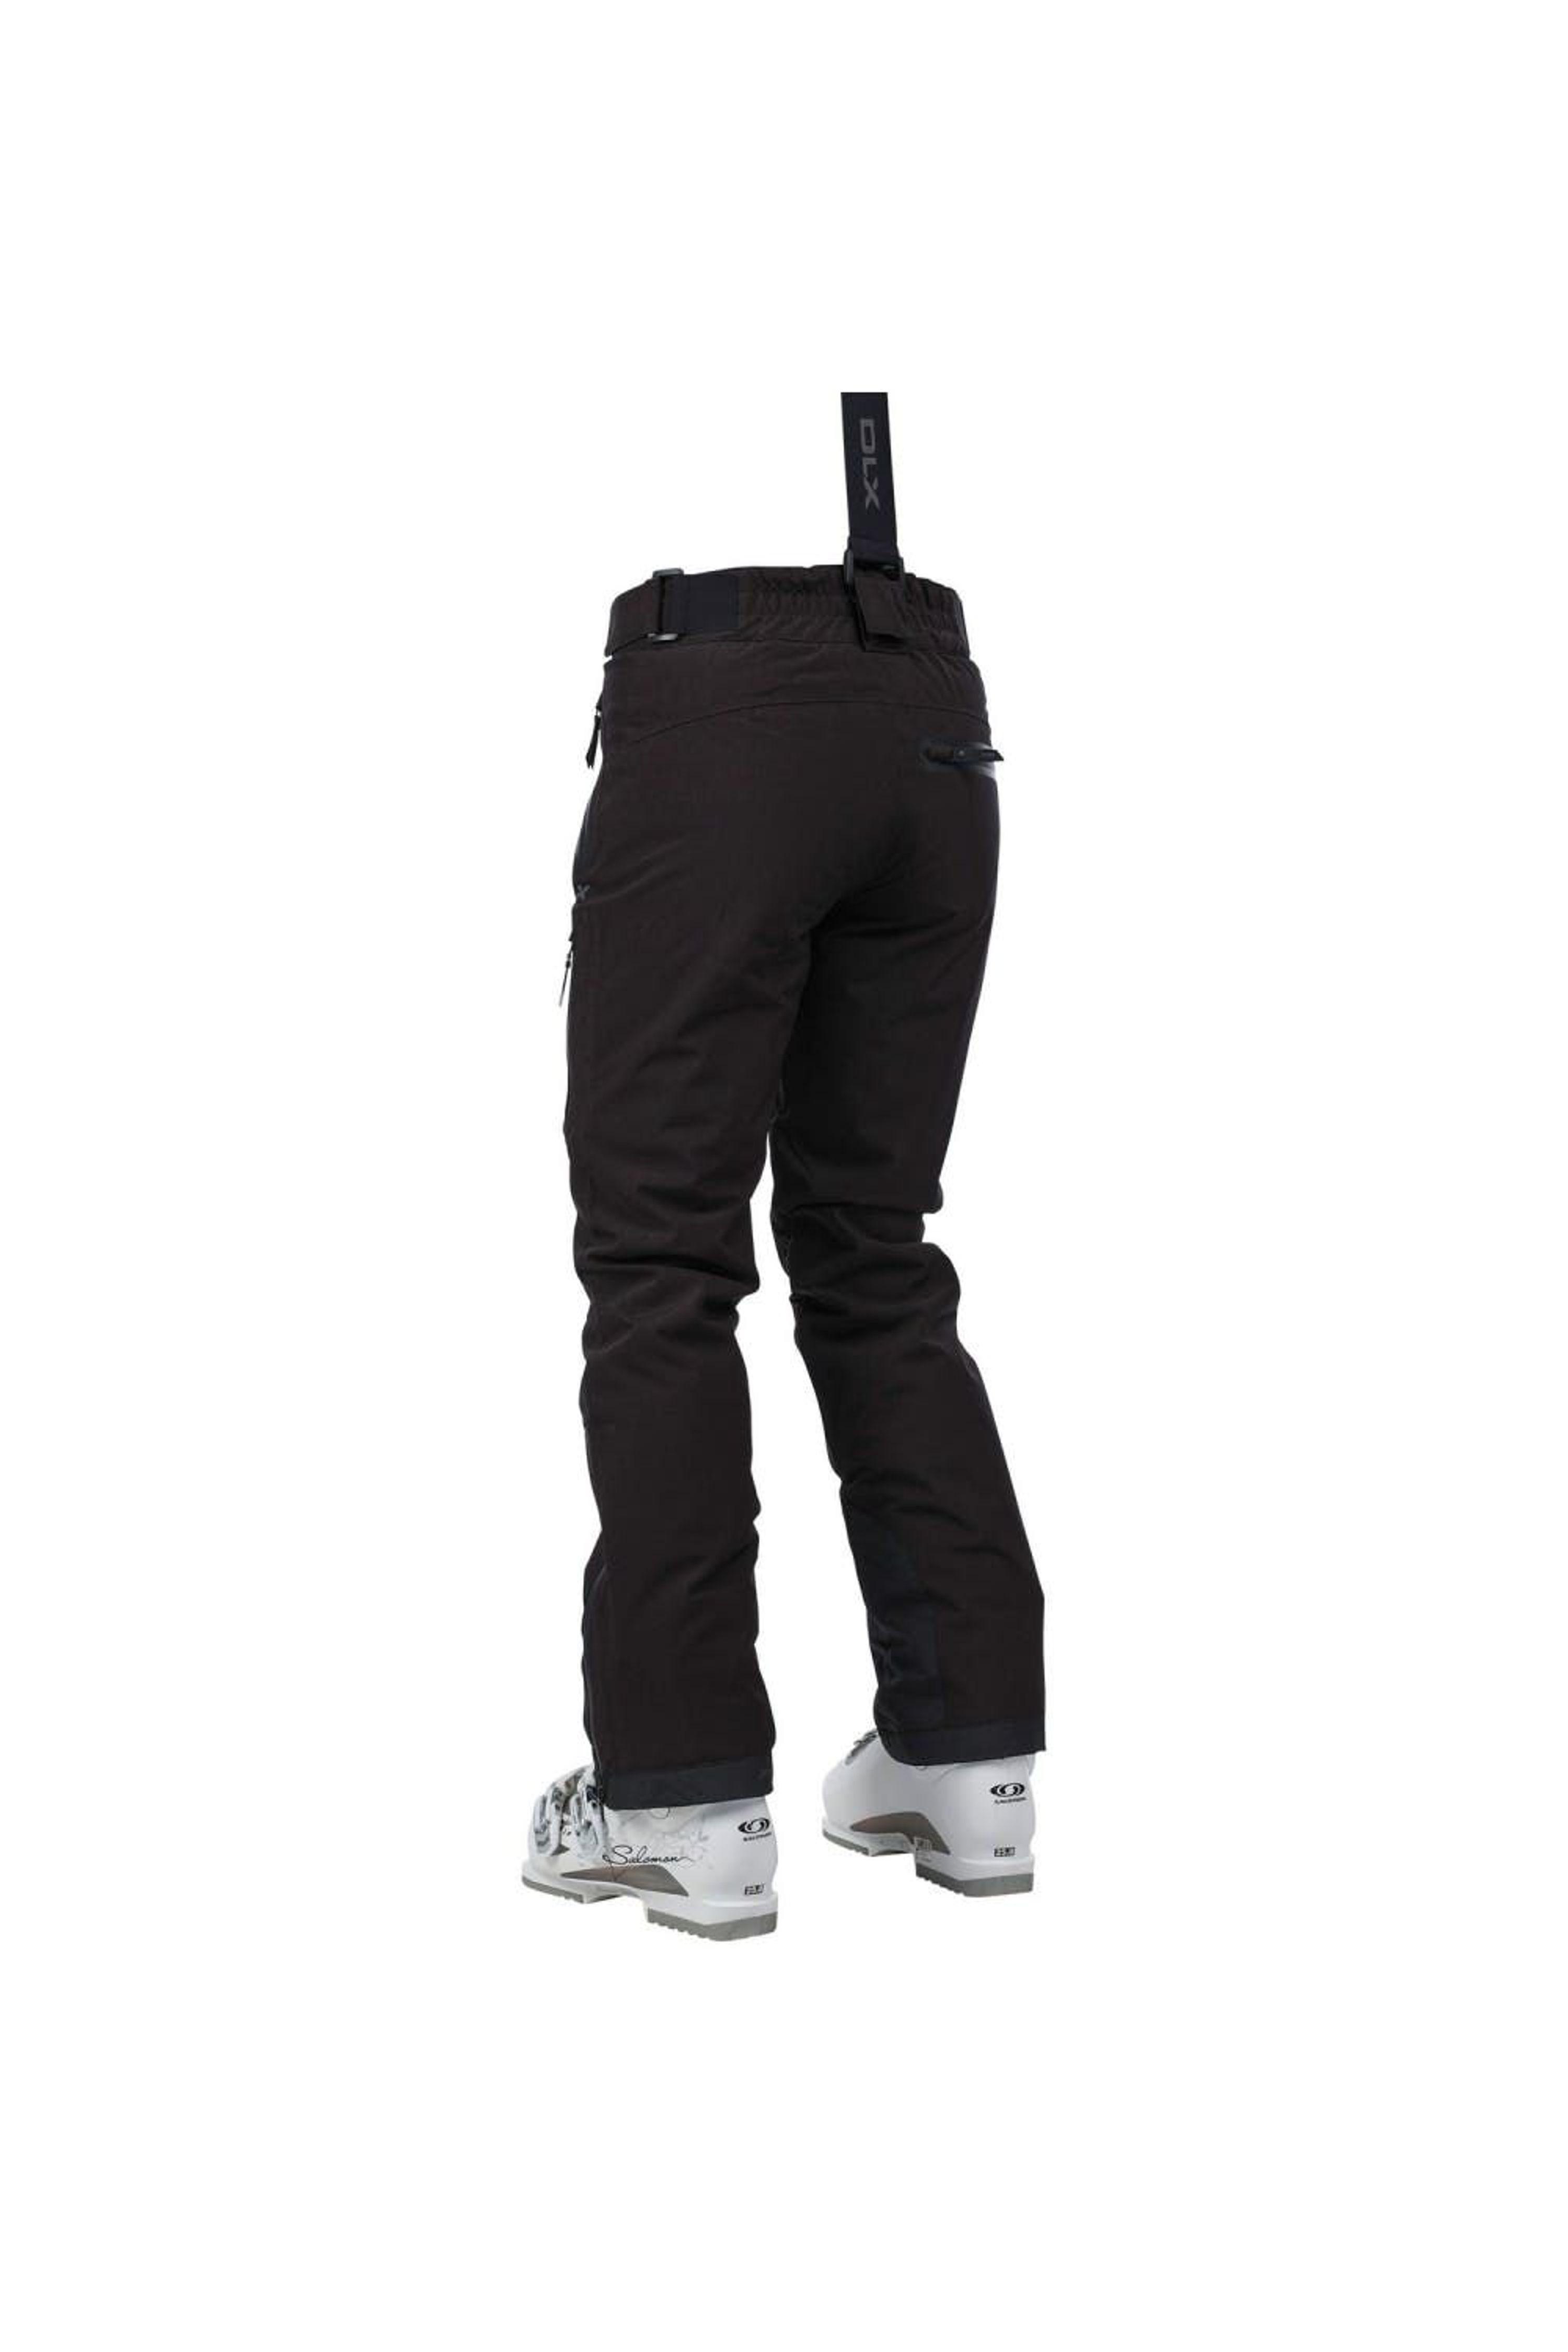 Trespass Marisol Ii Dlx Waterproof Ski Trousers in Black | Lyst